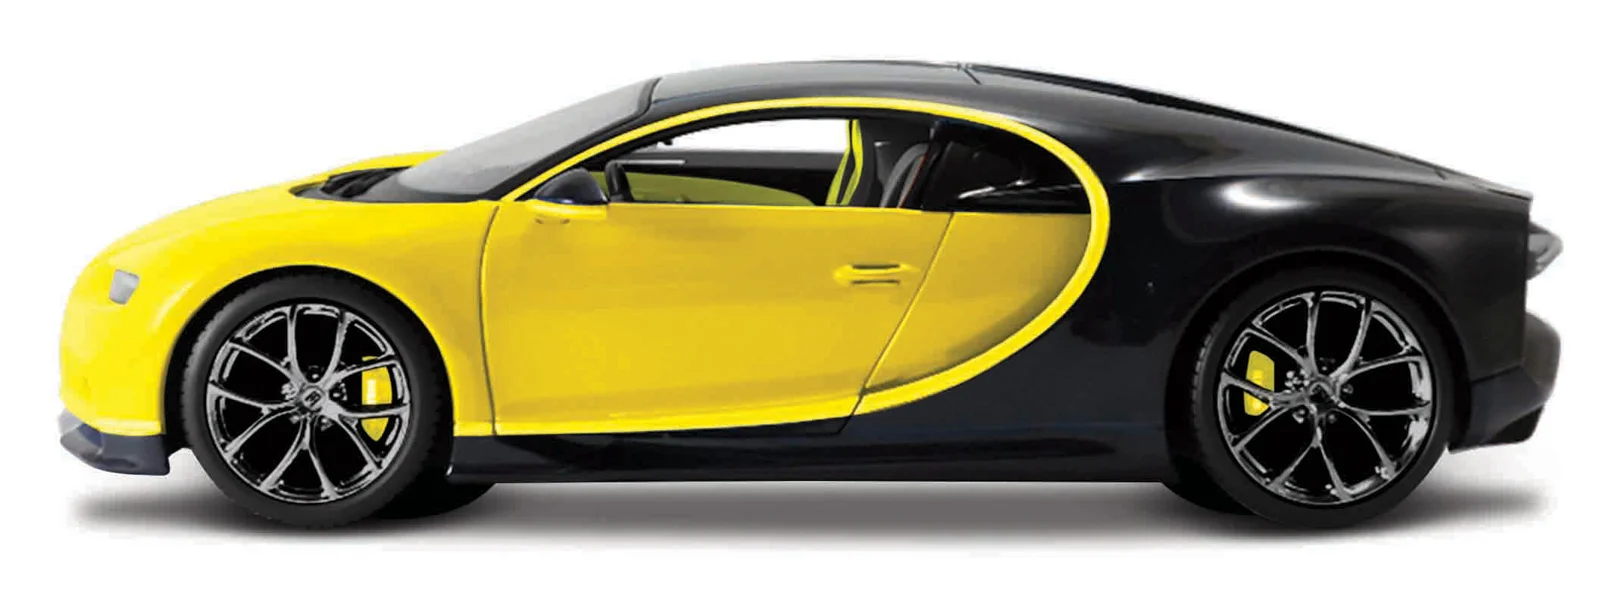 Maisto - Bugatti Chiron, žluto-černá, Exotics, 1:24